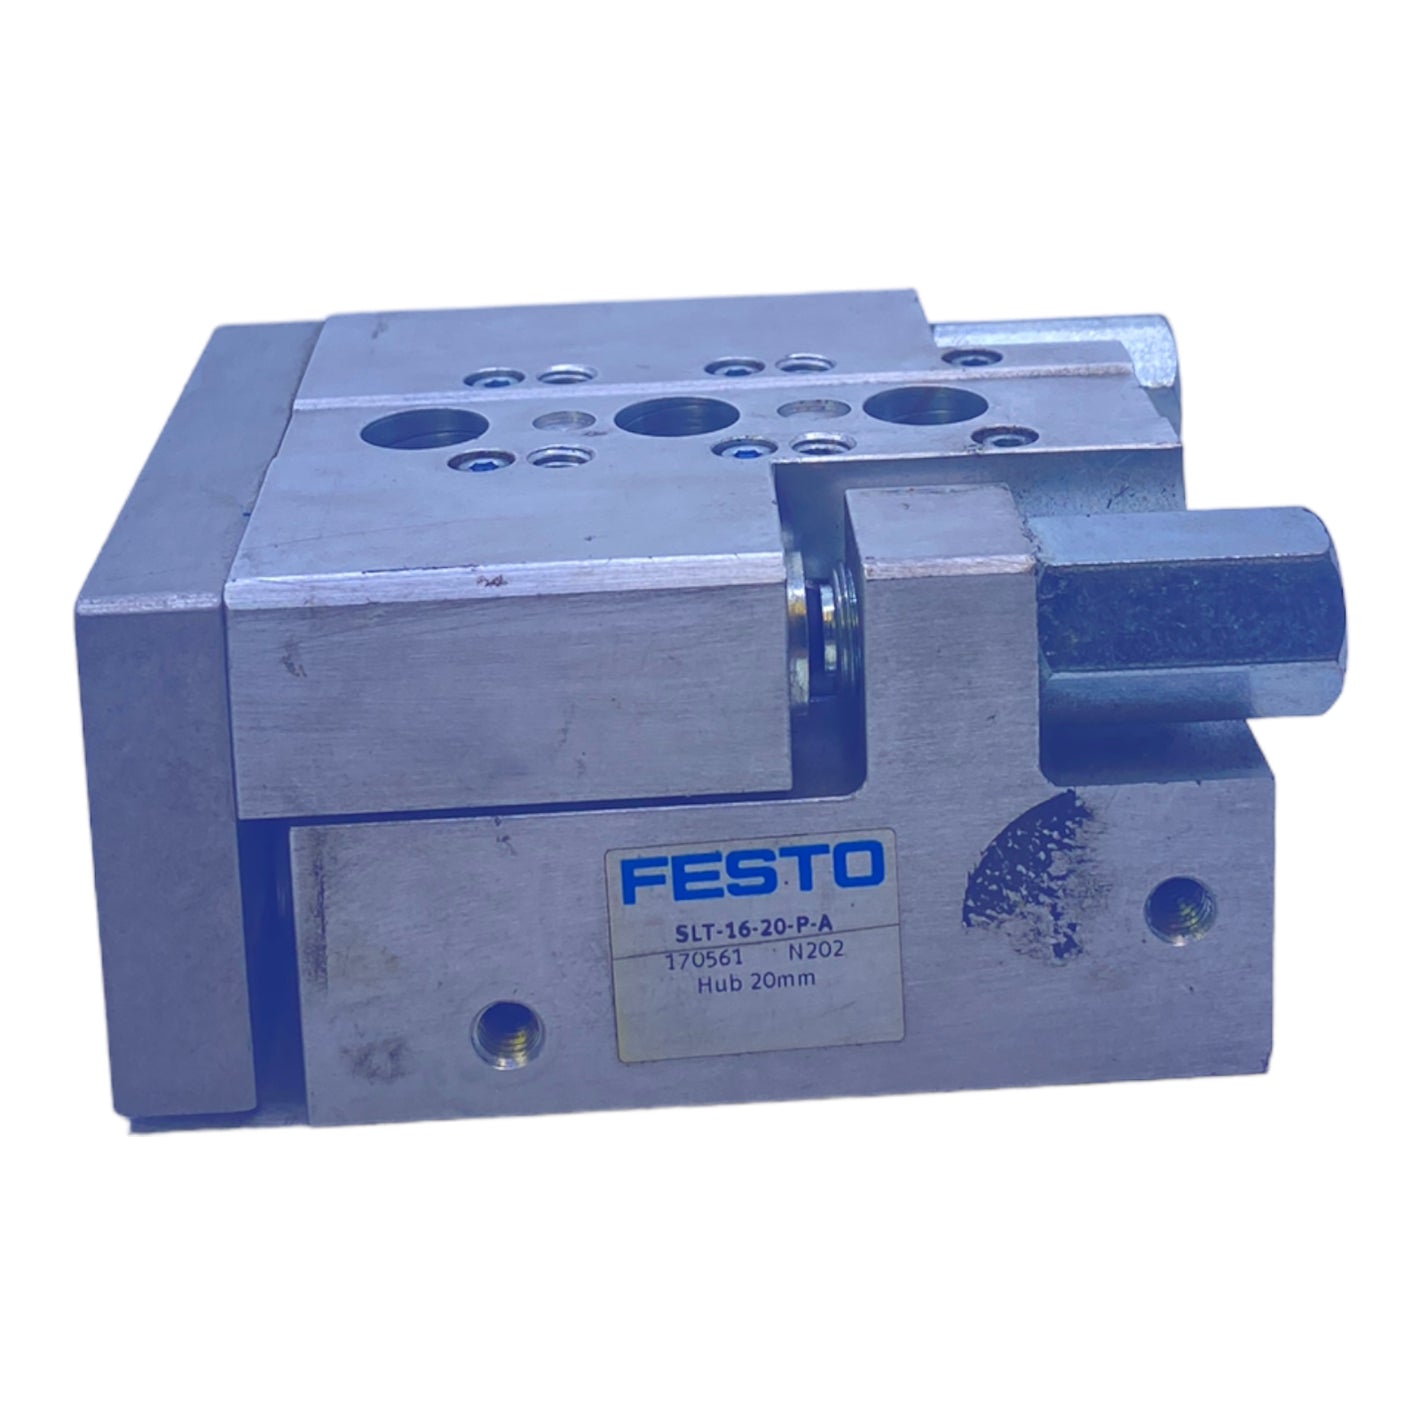 Festo SLT-16-20-P-A 170561 Mini-Schlitten Pneumatik